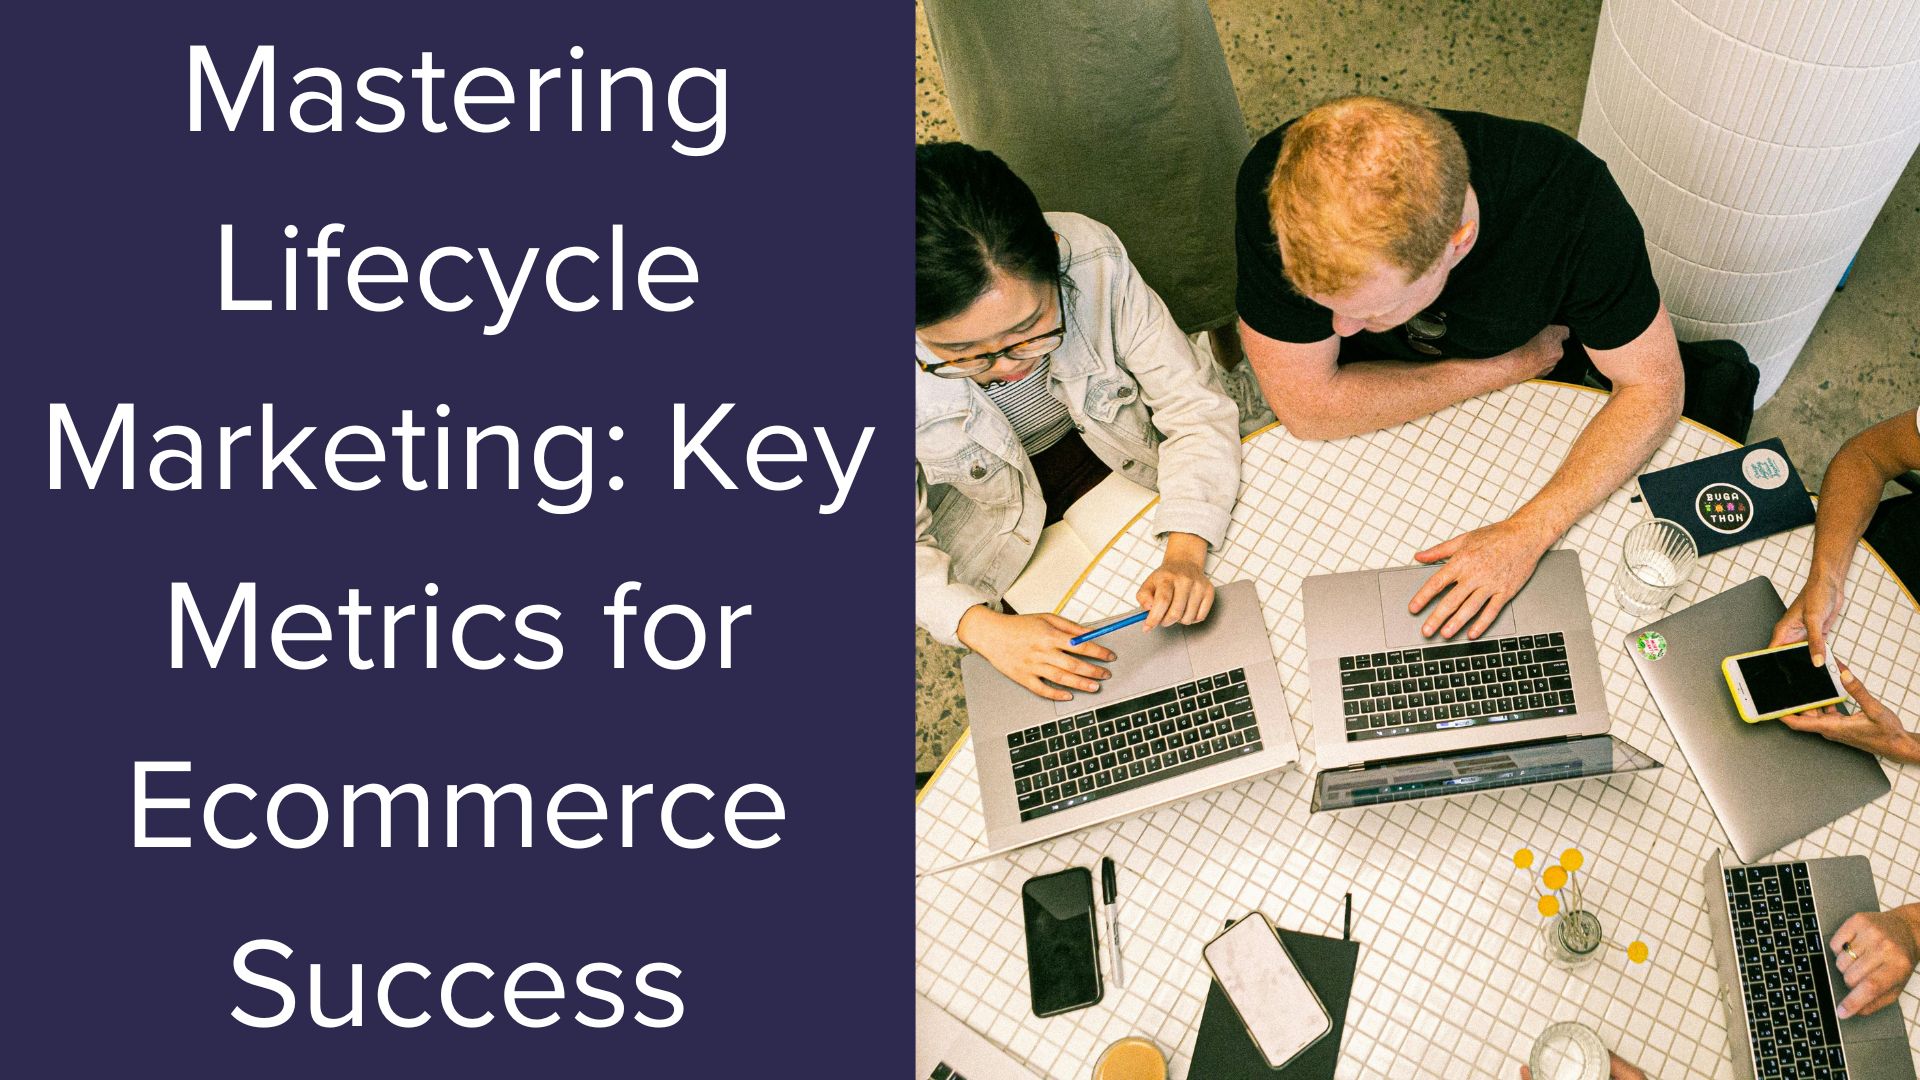 Mastering Lifecycle Marketing: Key Metrics for Ecommerce Success